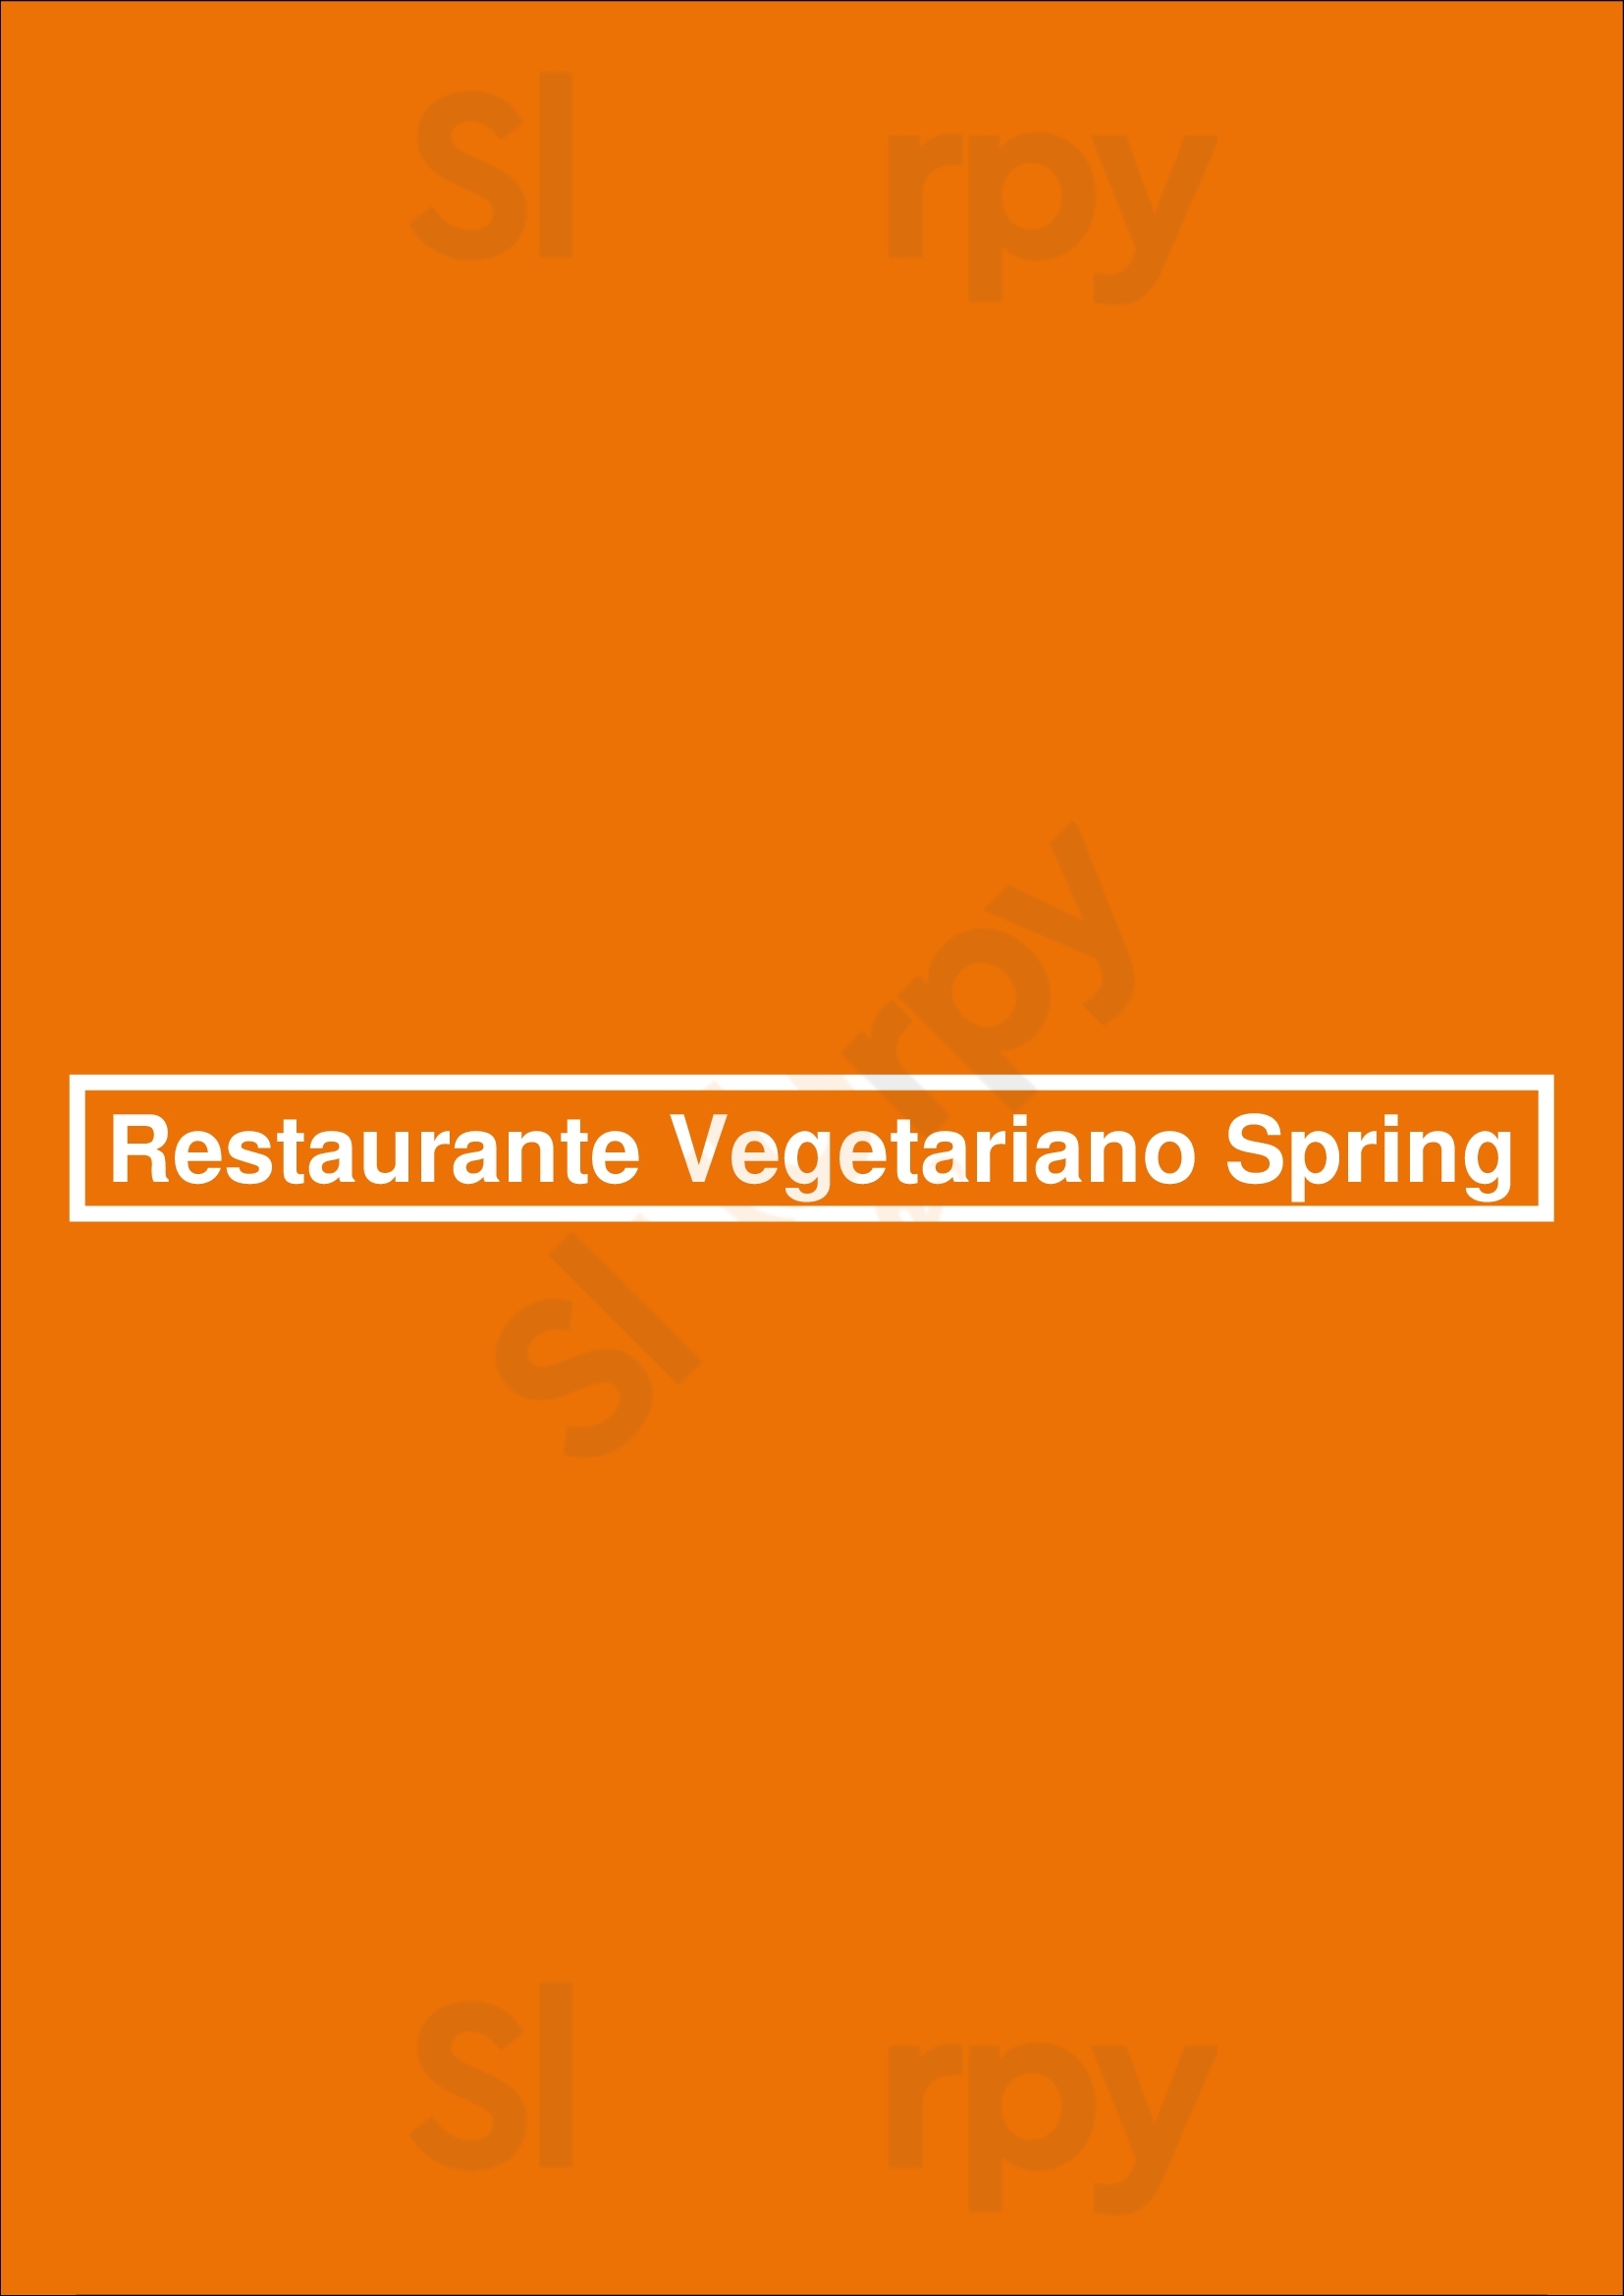 Restaurante Vegetariano Spring Buenos Aires Menu - 1